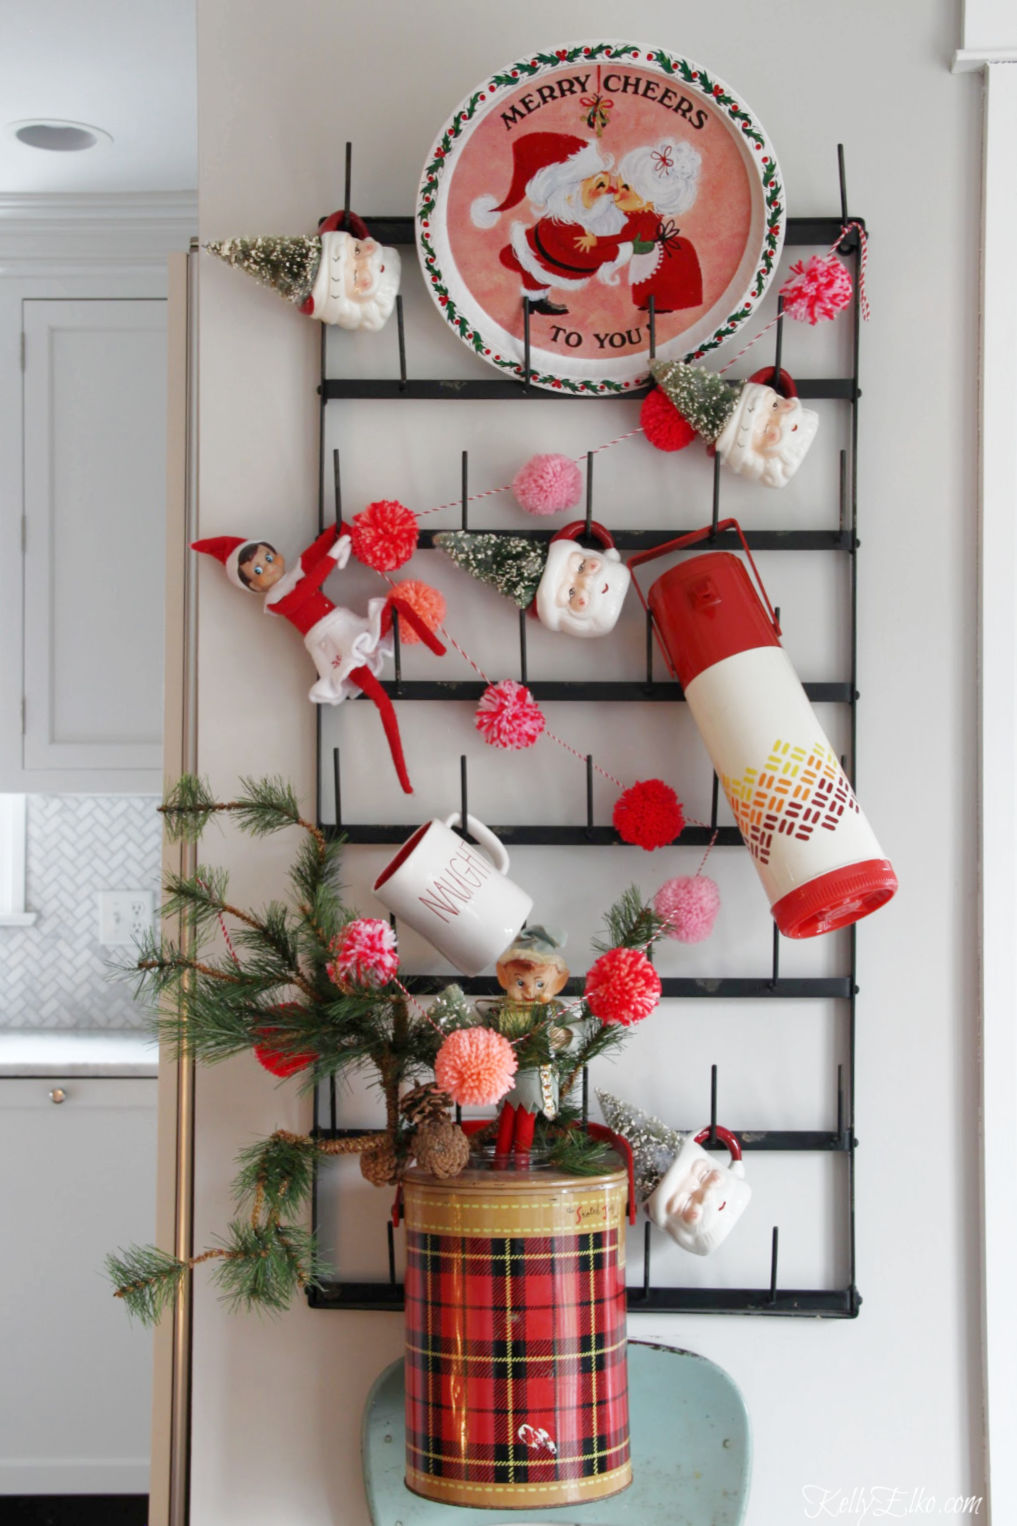 Vintage Christmas display - love the Santa mugs and old thermoses kellyelko.com #vintage #vintagedecor #vintagechristmas #santa #christmasdecor #christmaskitchen #kellyelko